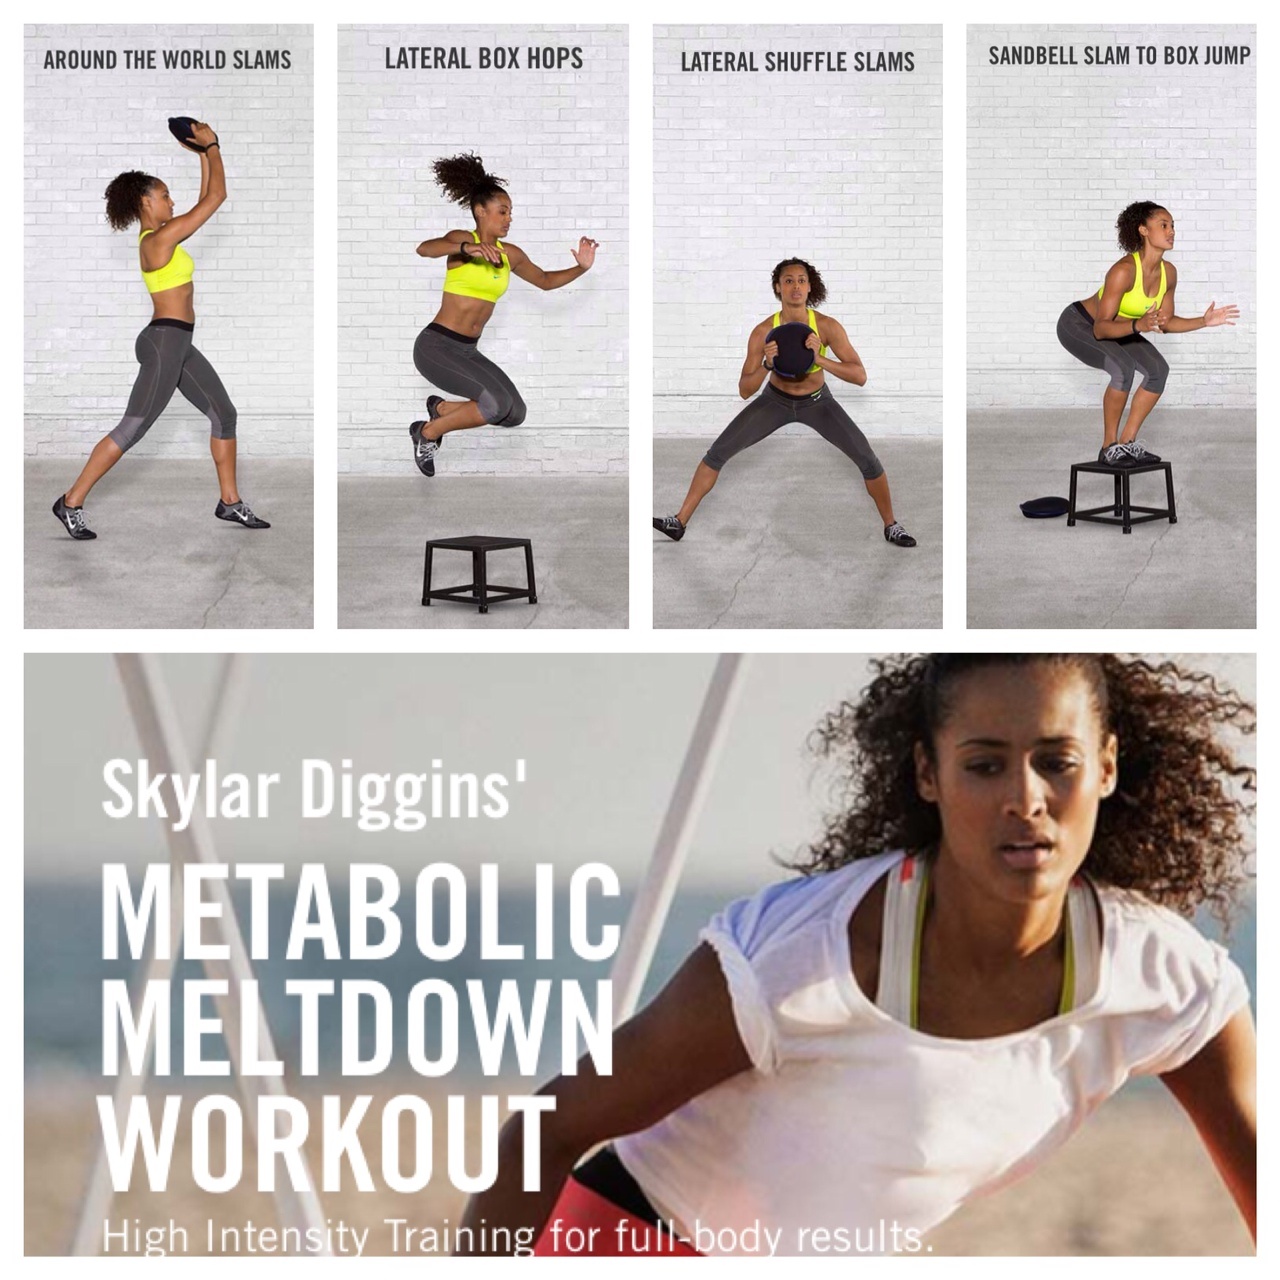 Nike HIIT Workout. Metabolic фитнес. HIIT metabolic тренировка. Nike Training app. Work out now